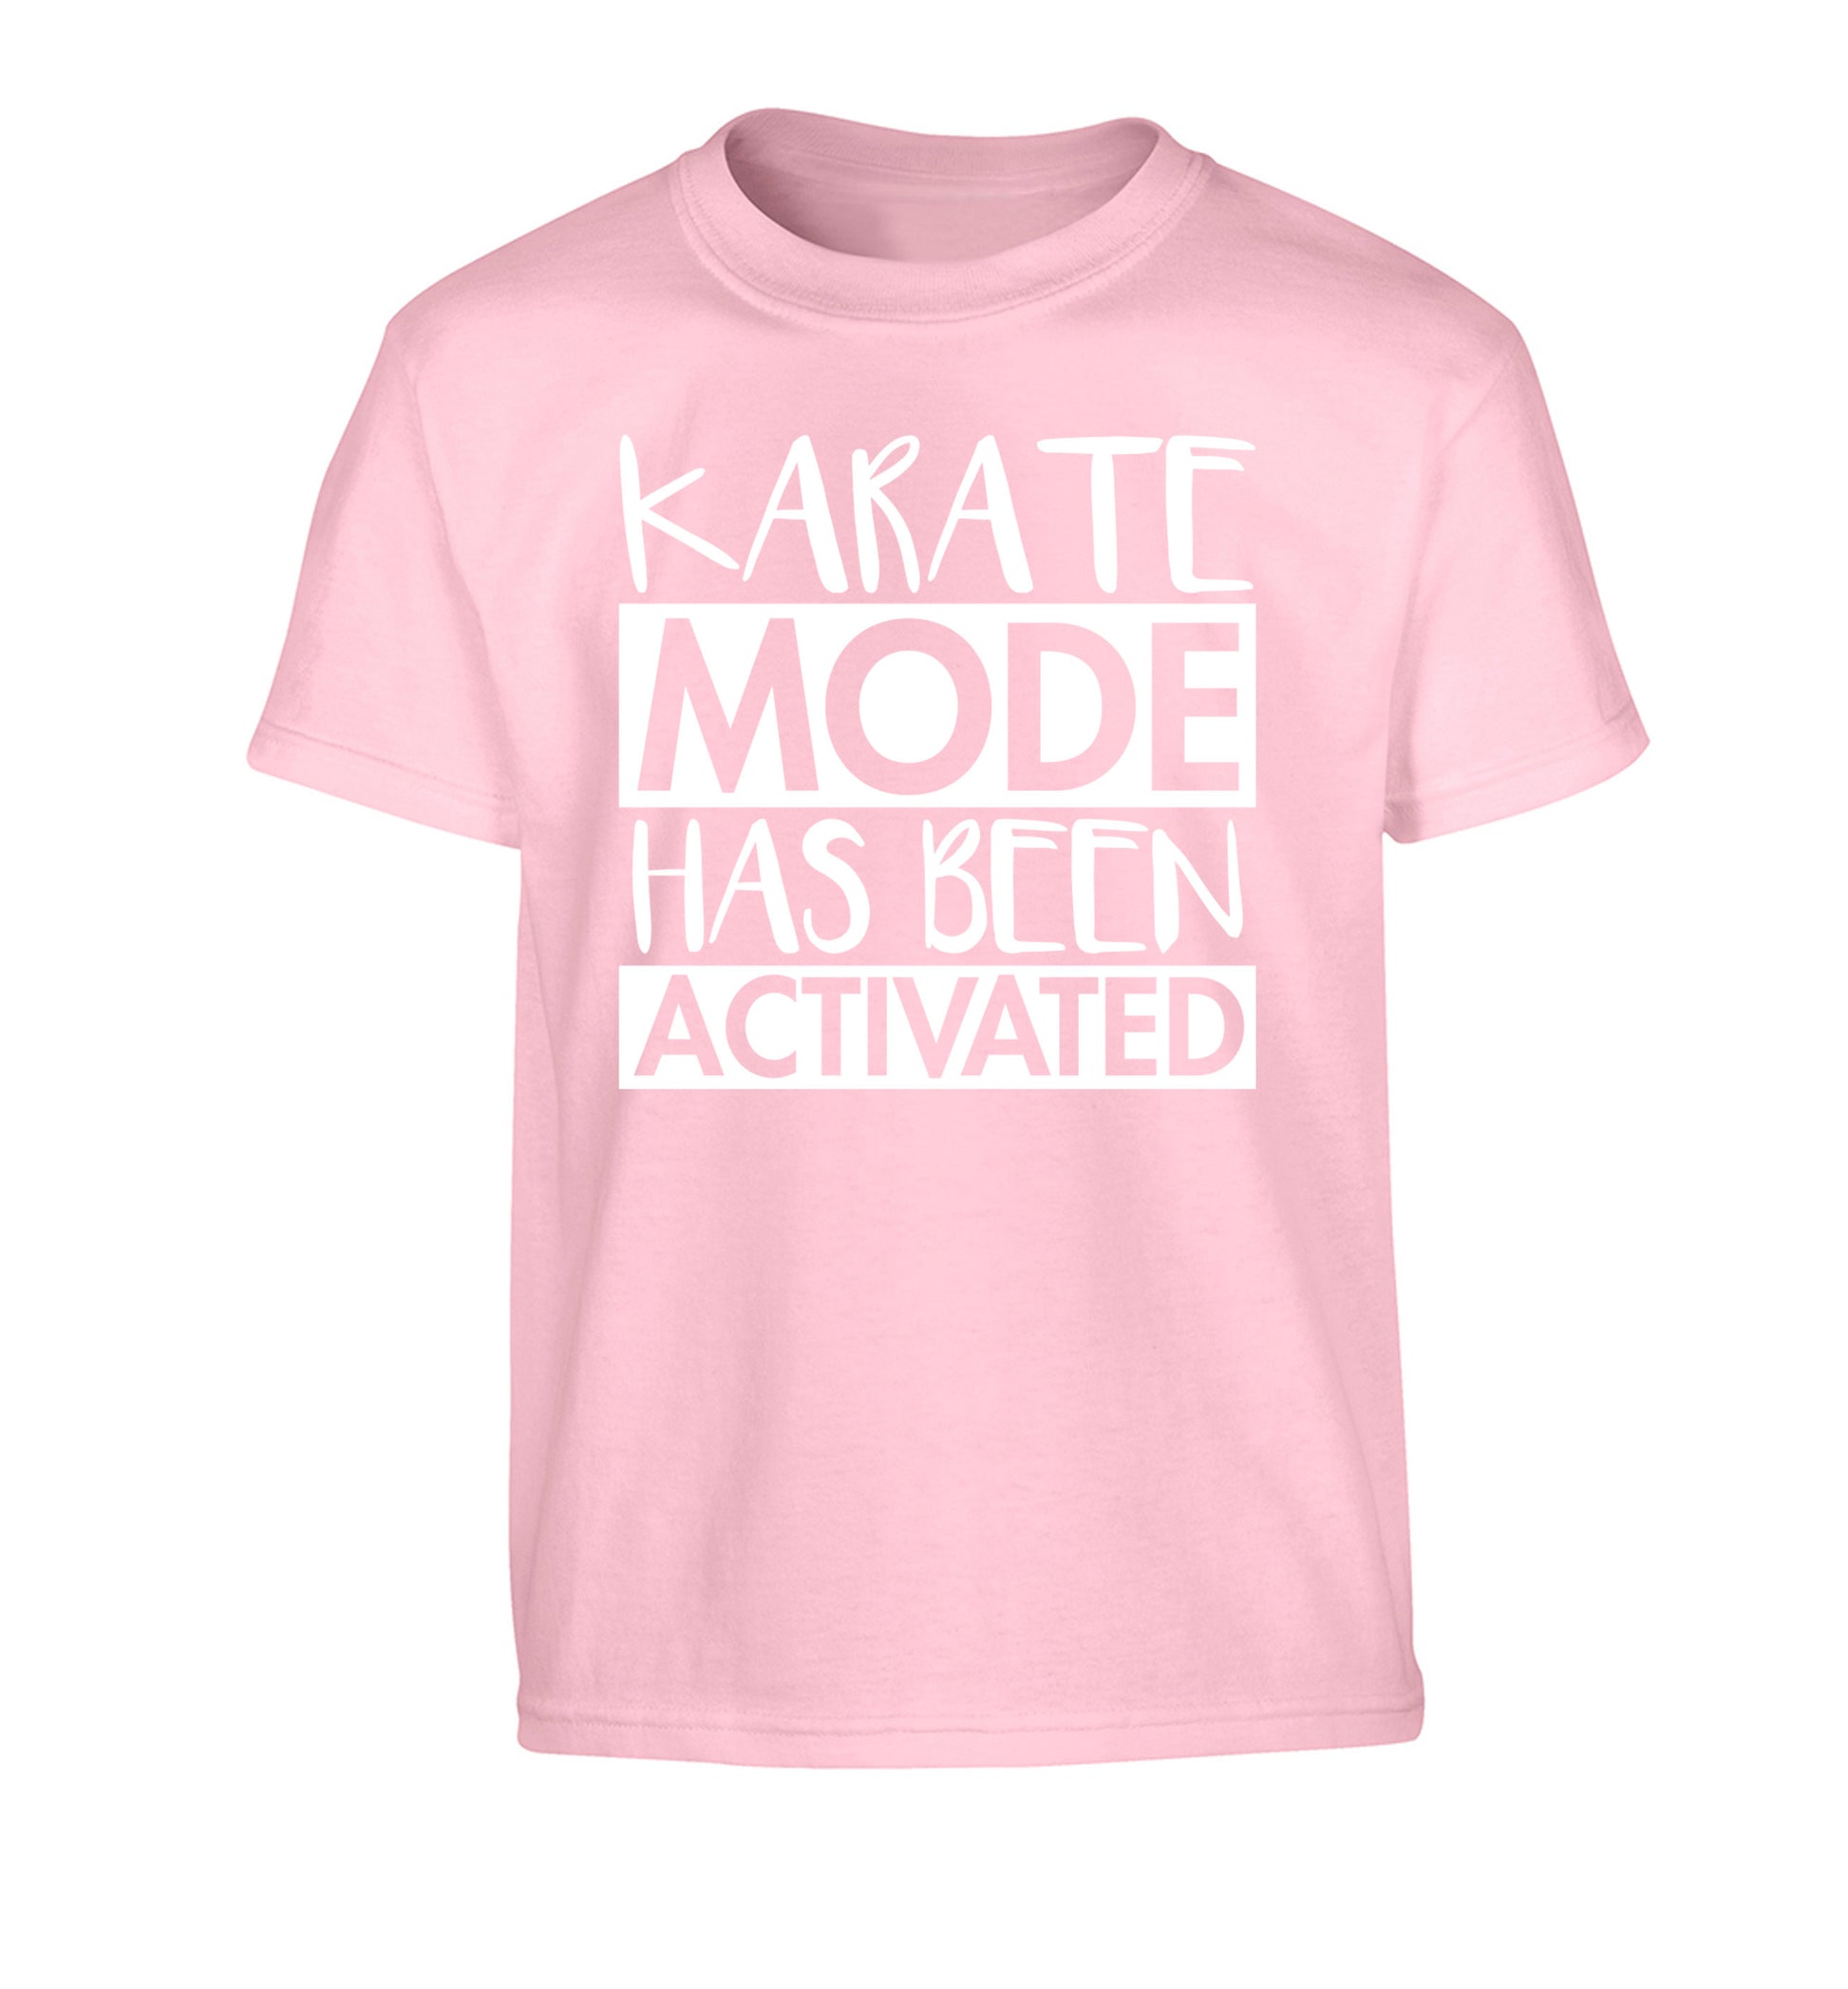 Karate mode activated Children's light pink Tshirt 12-14 Years